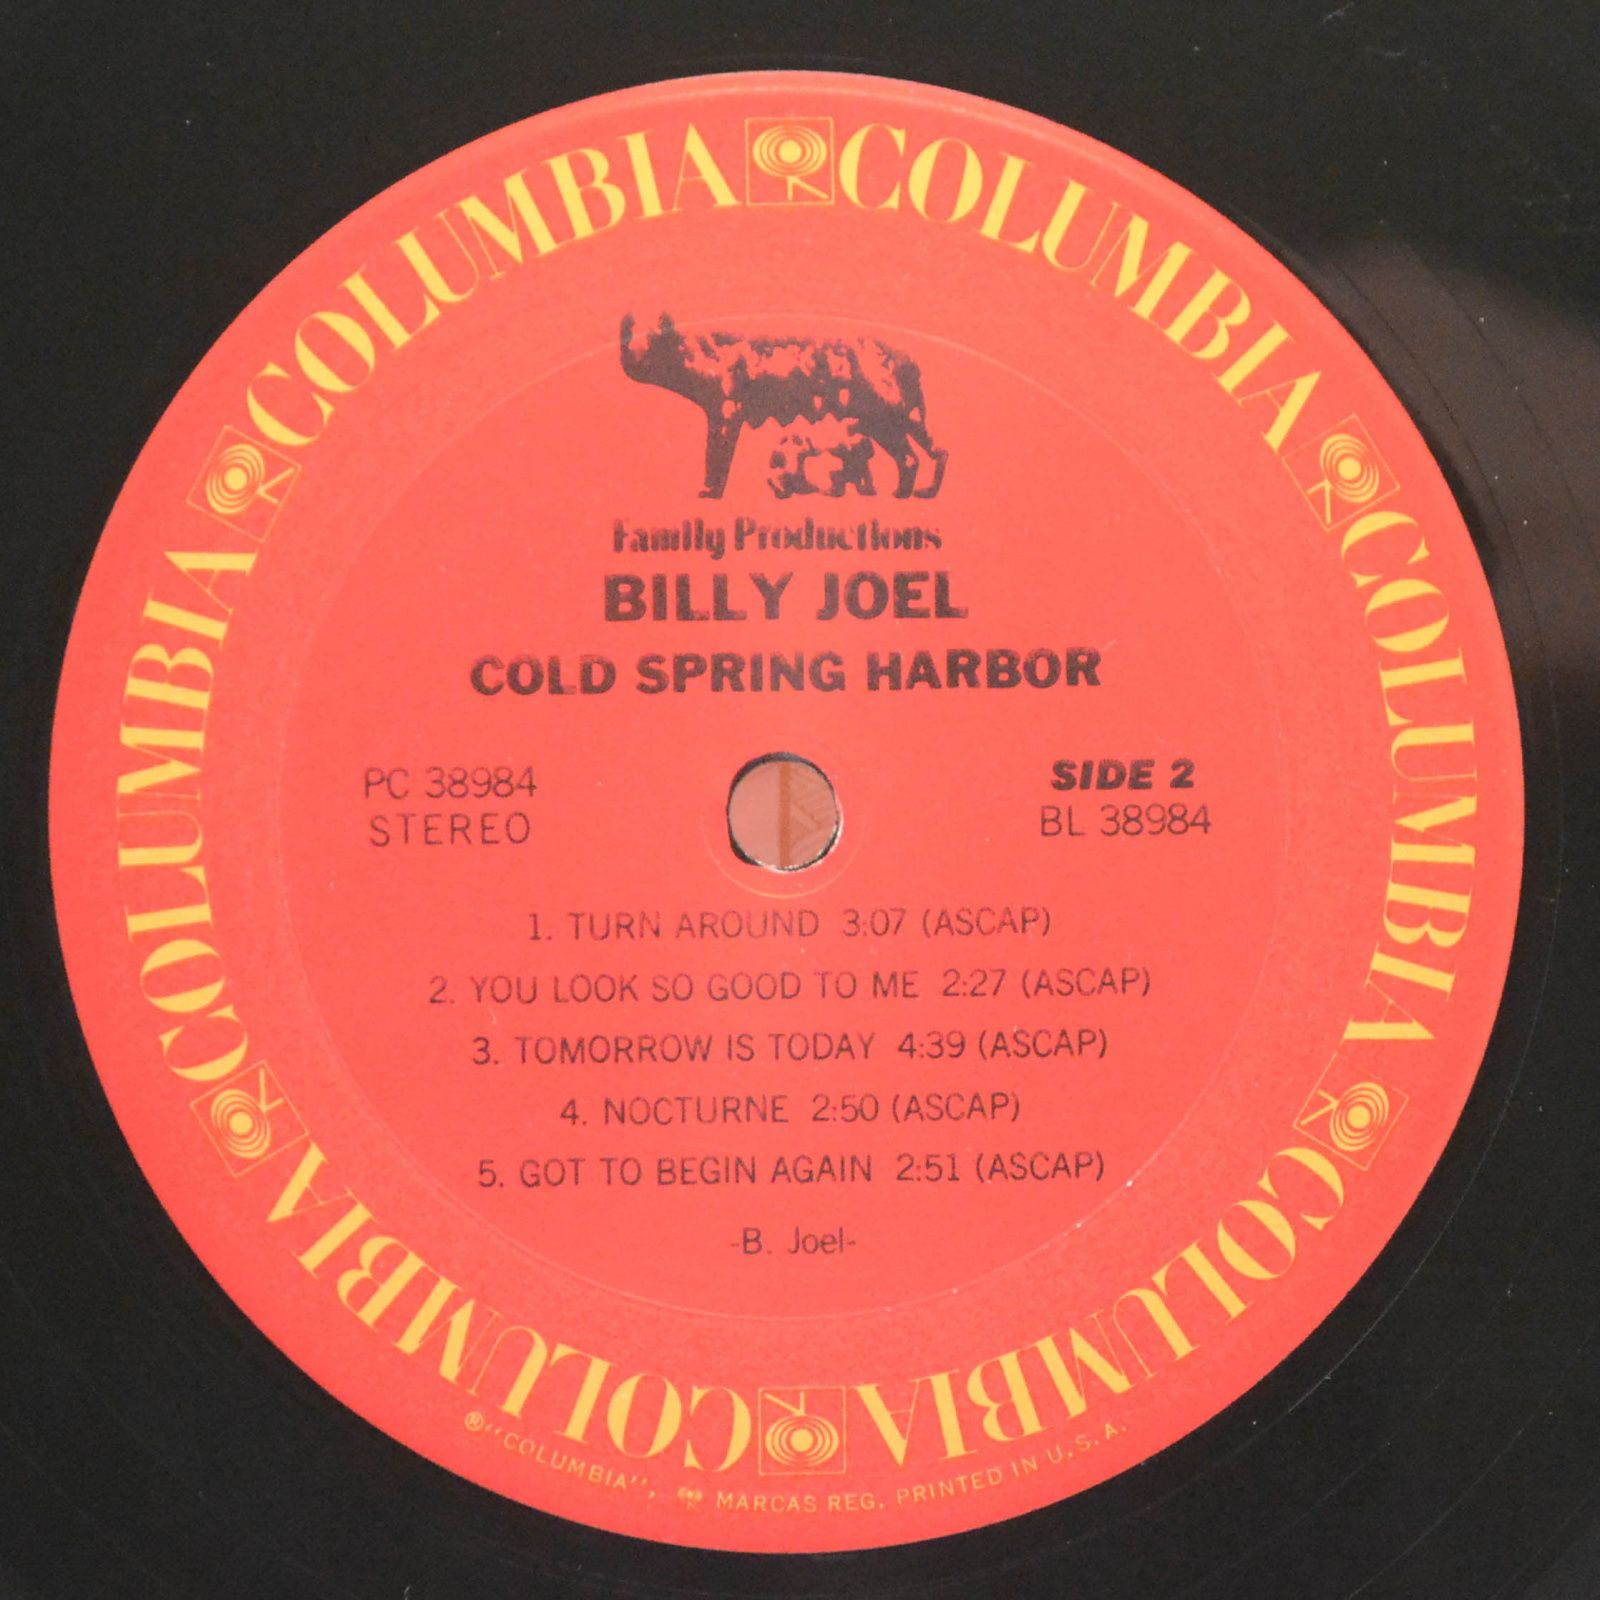 Billy Joel — Cold Spring Harbor (USA), 1971